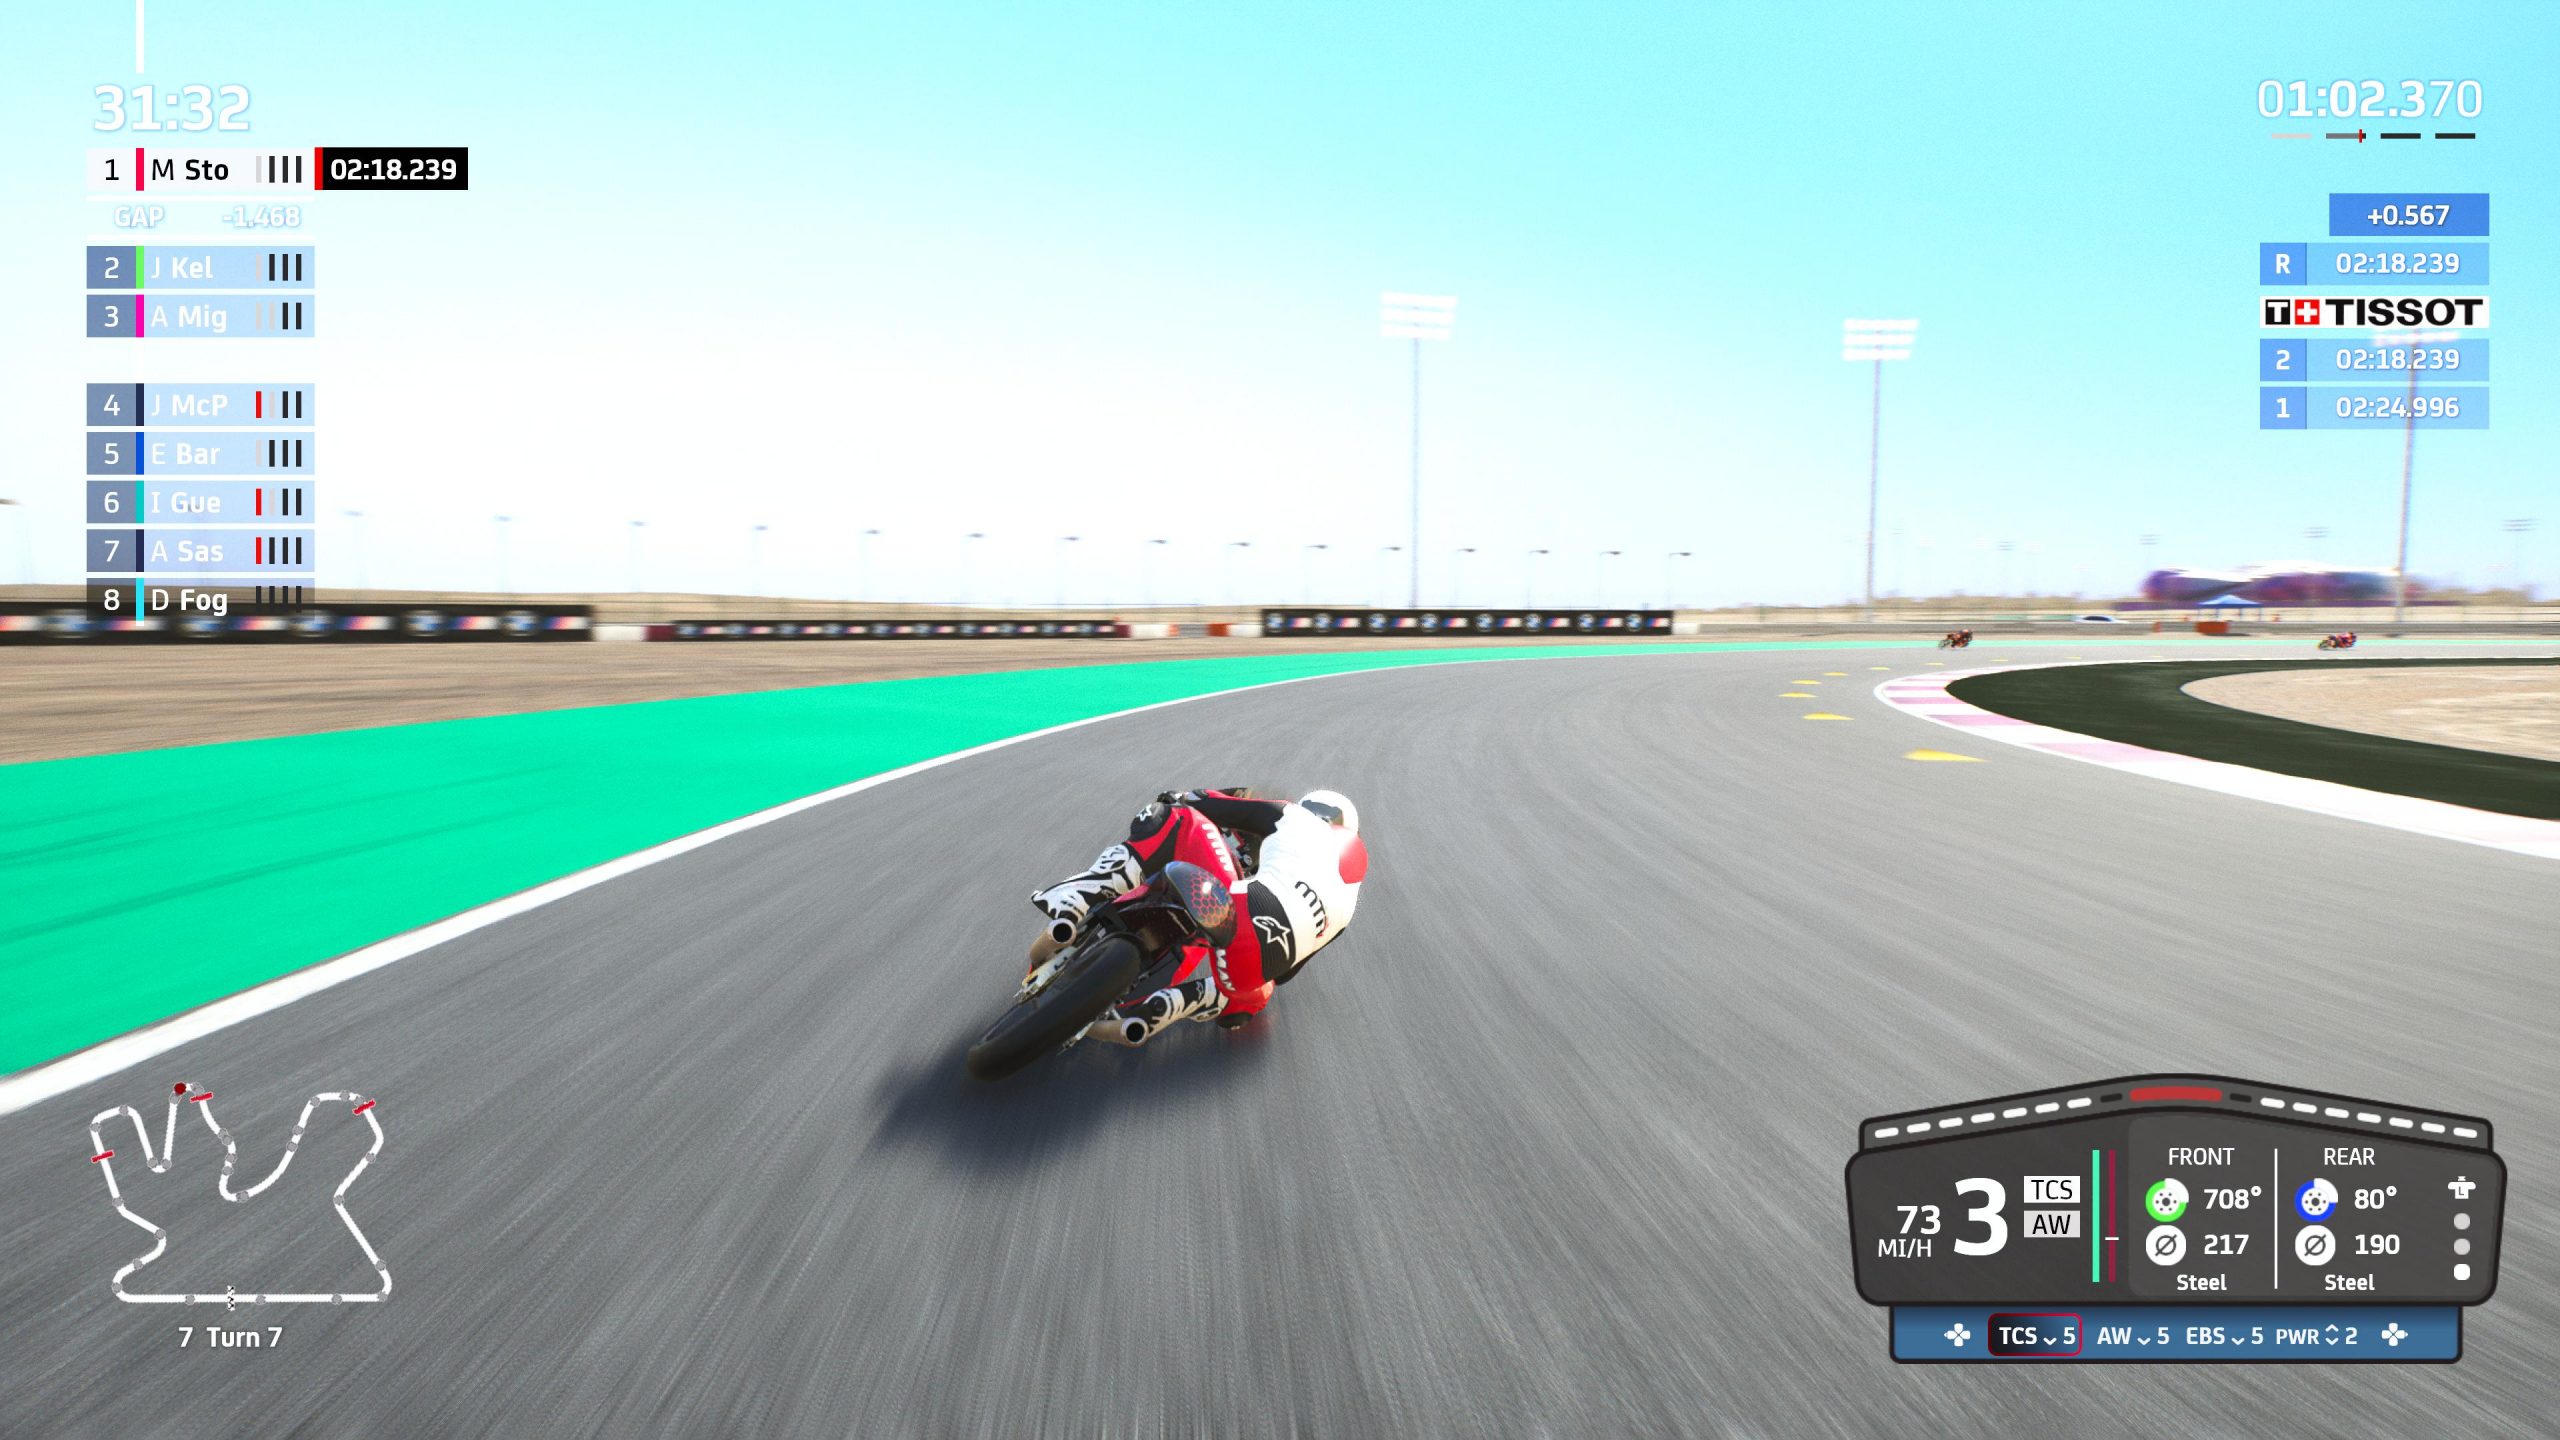 Moto GP 22 cornering